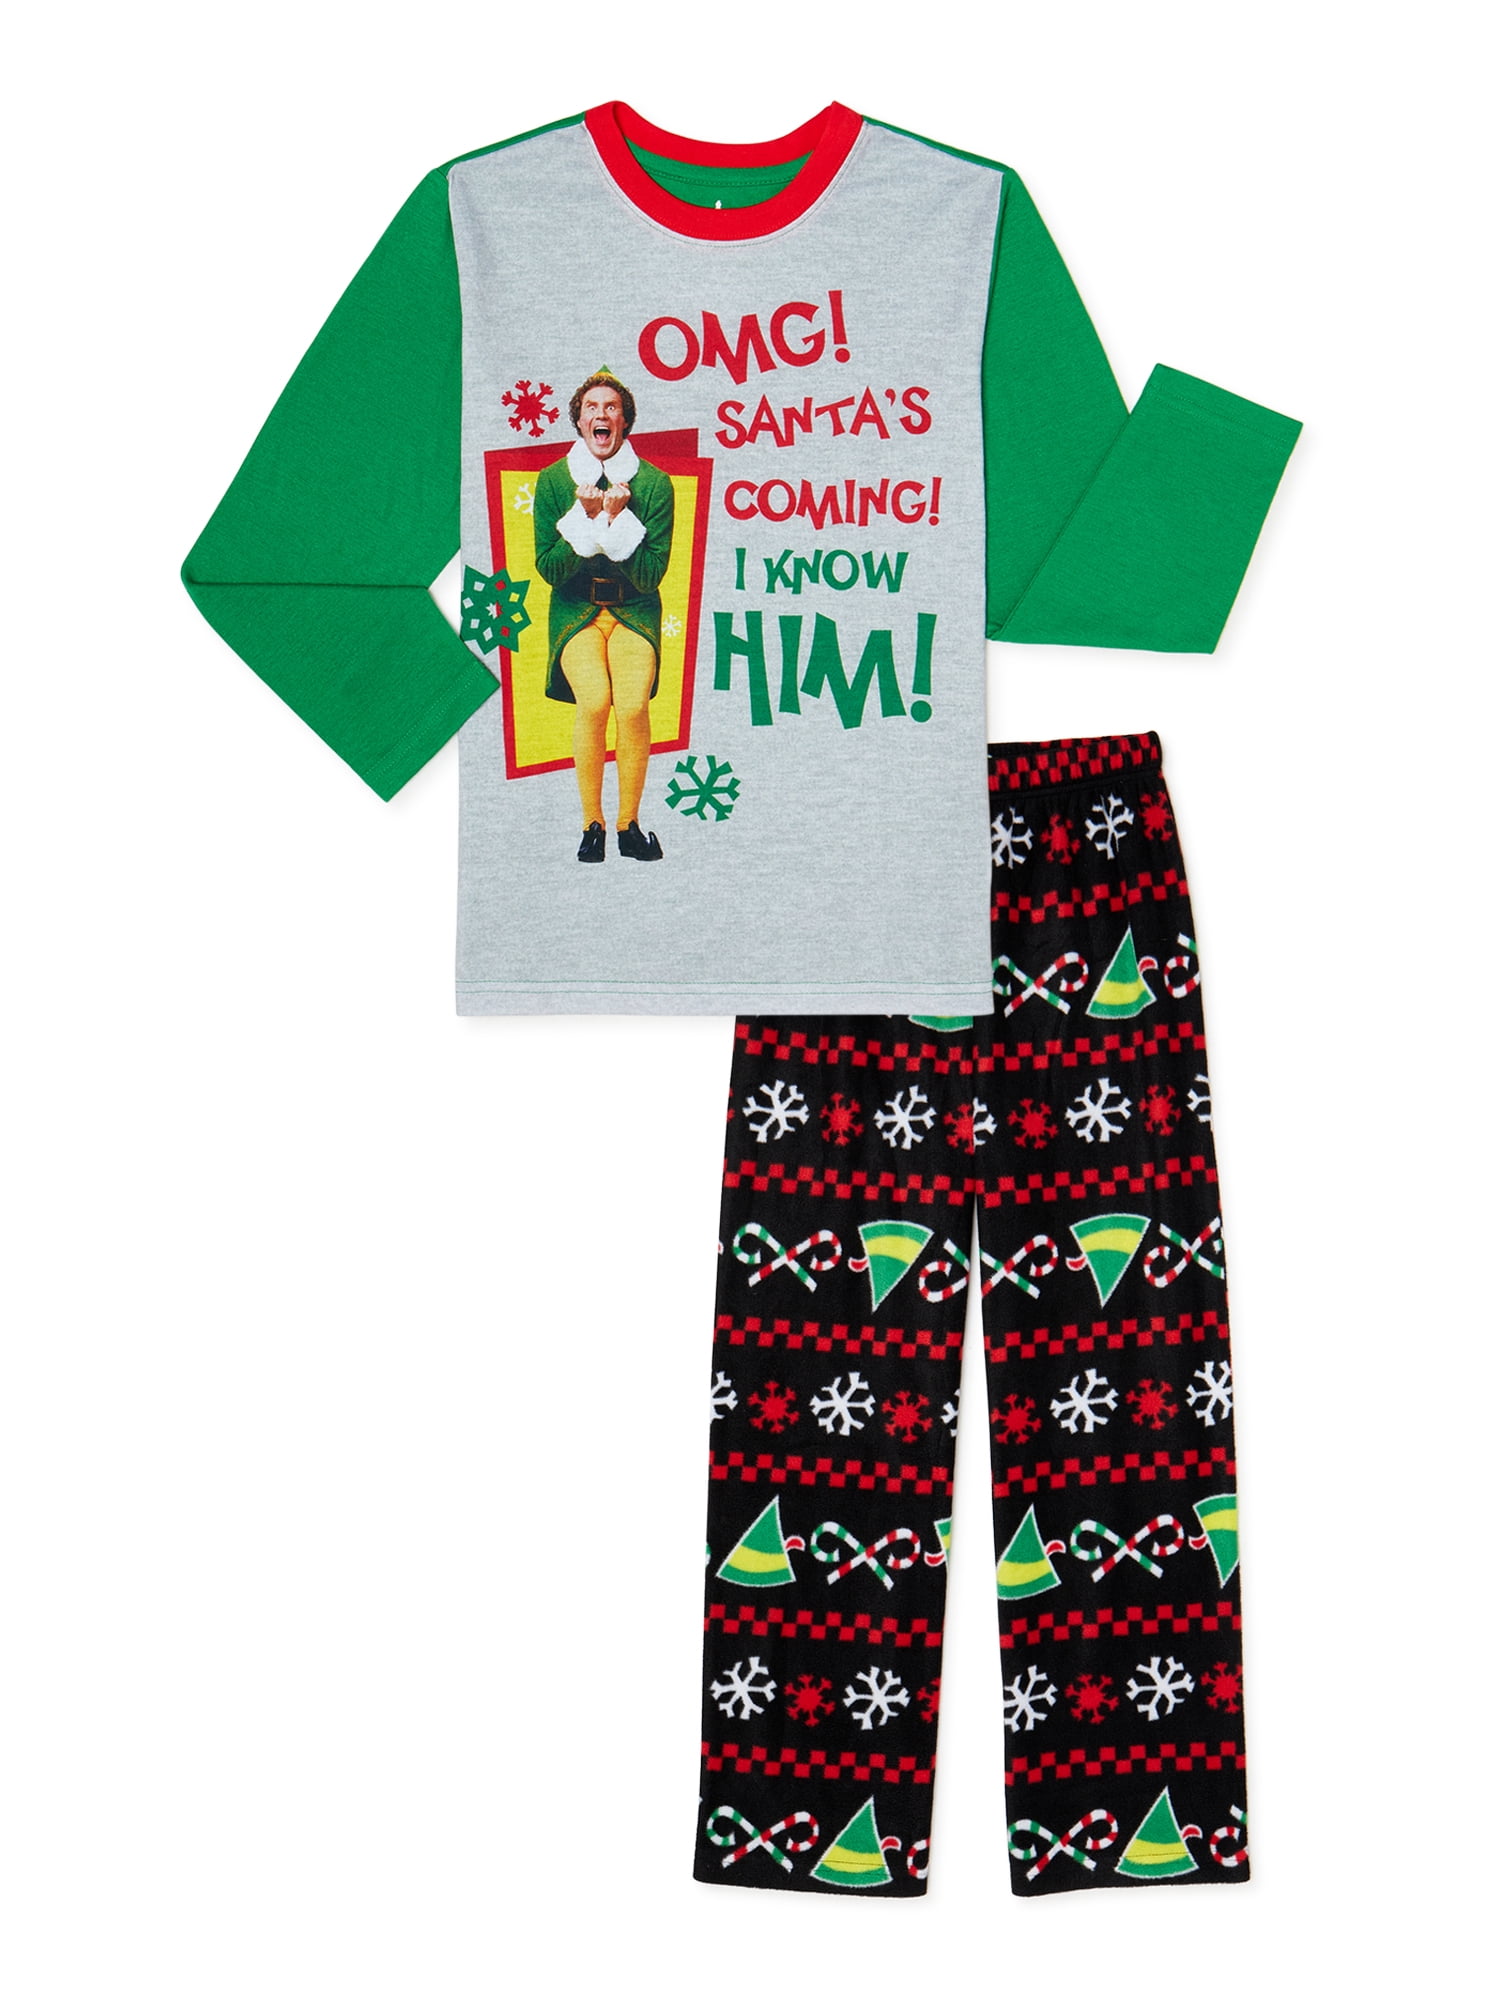 Buddy The Elf Pajamas Size Medium Adult NEW W/ Tags 